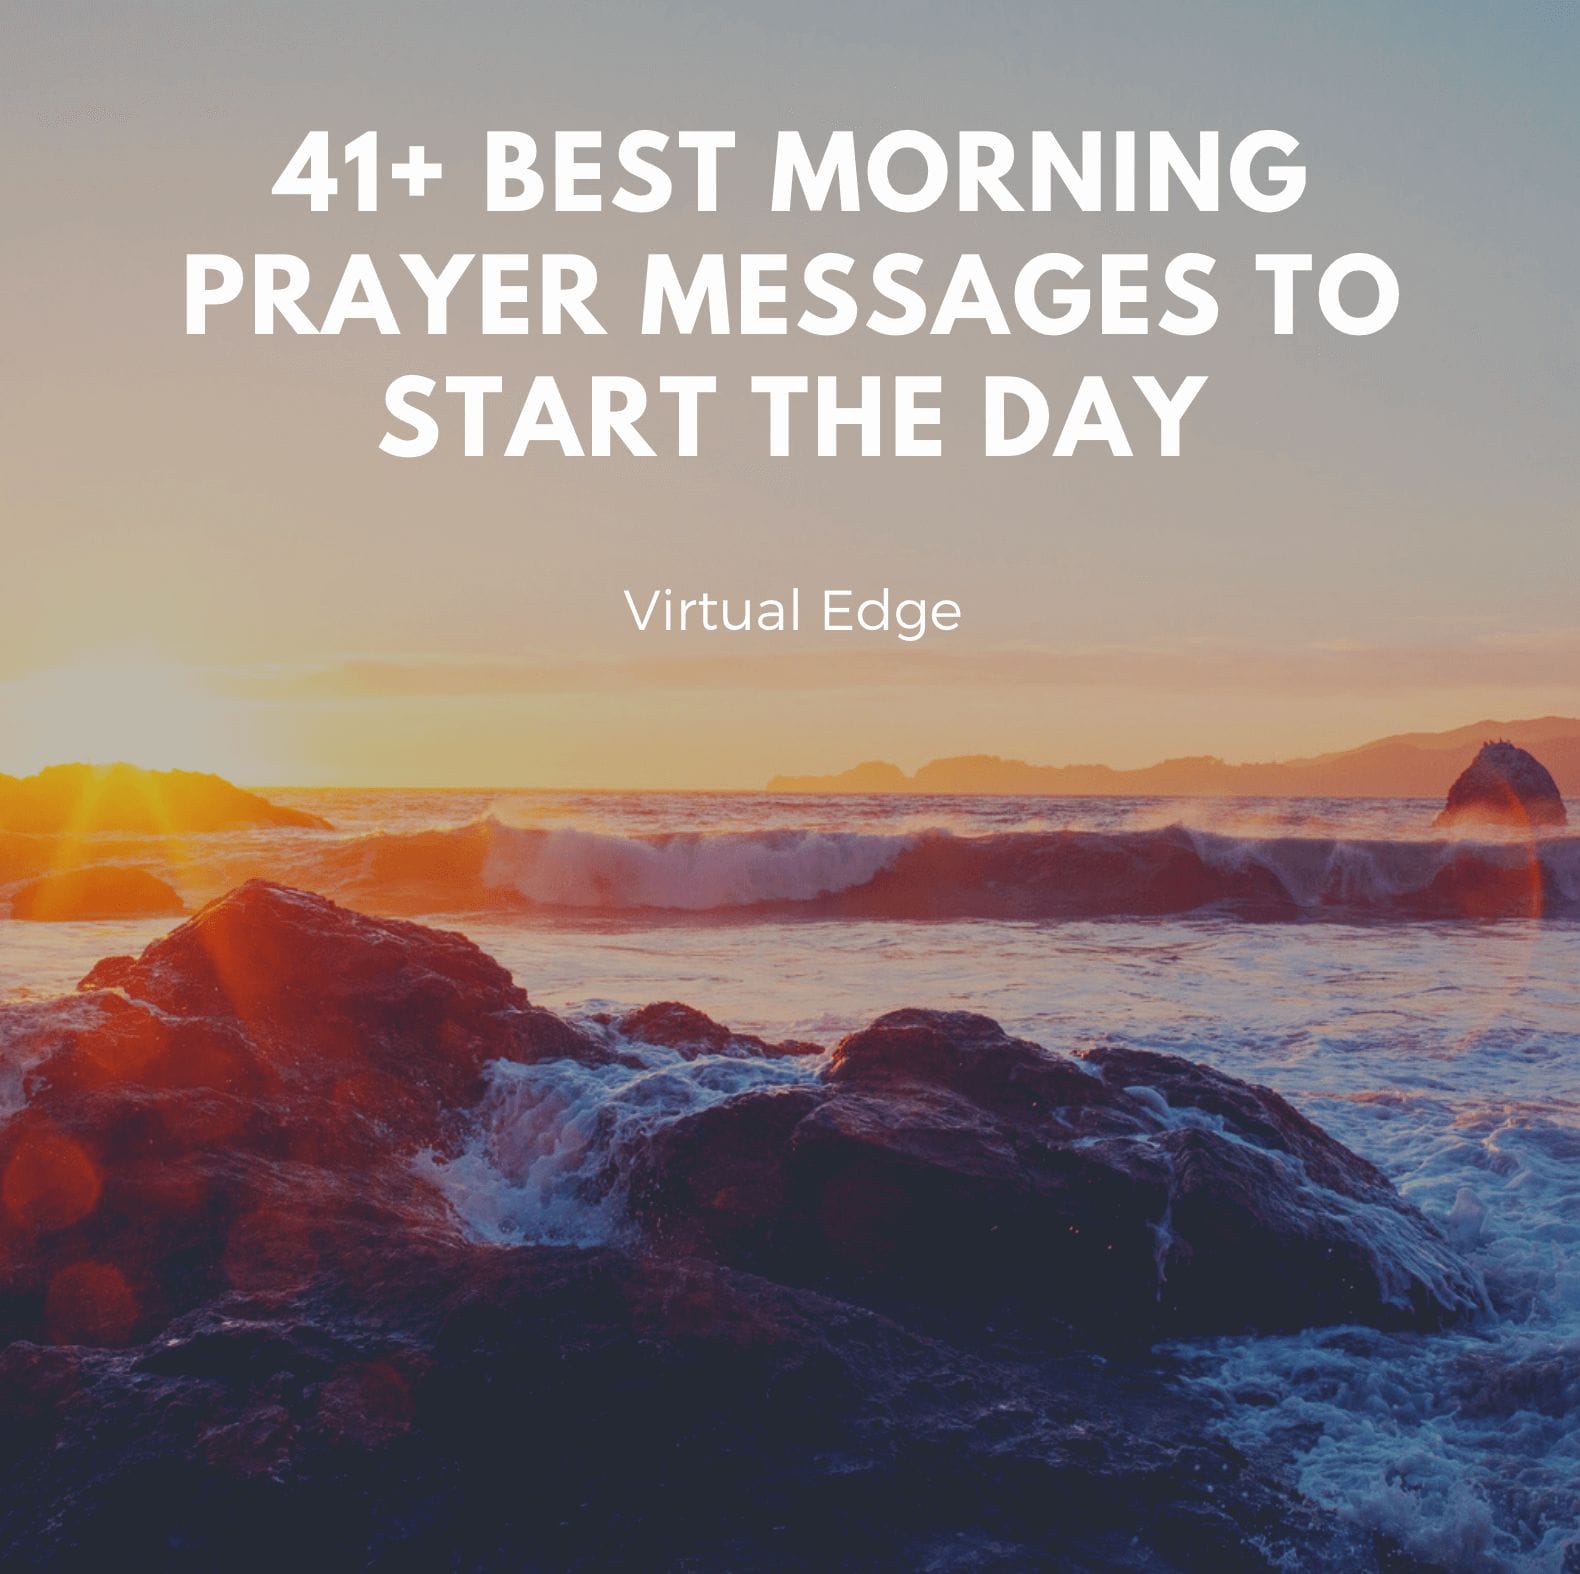 Good morning prayer wishes